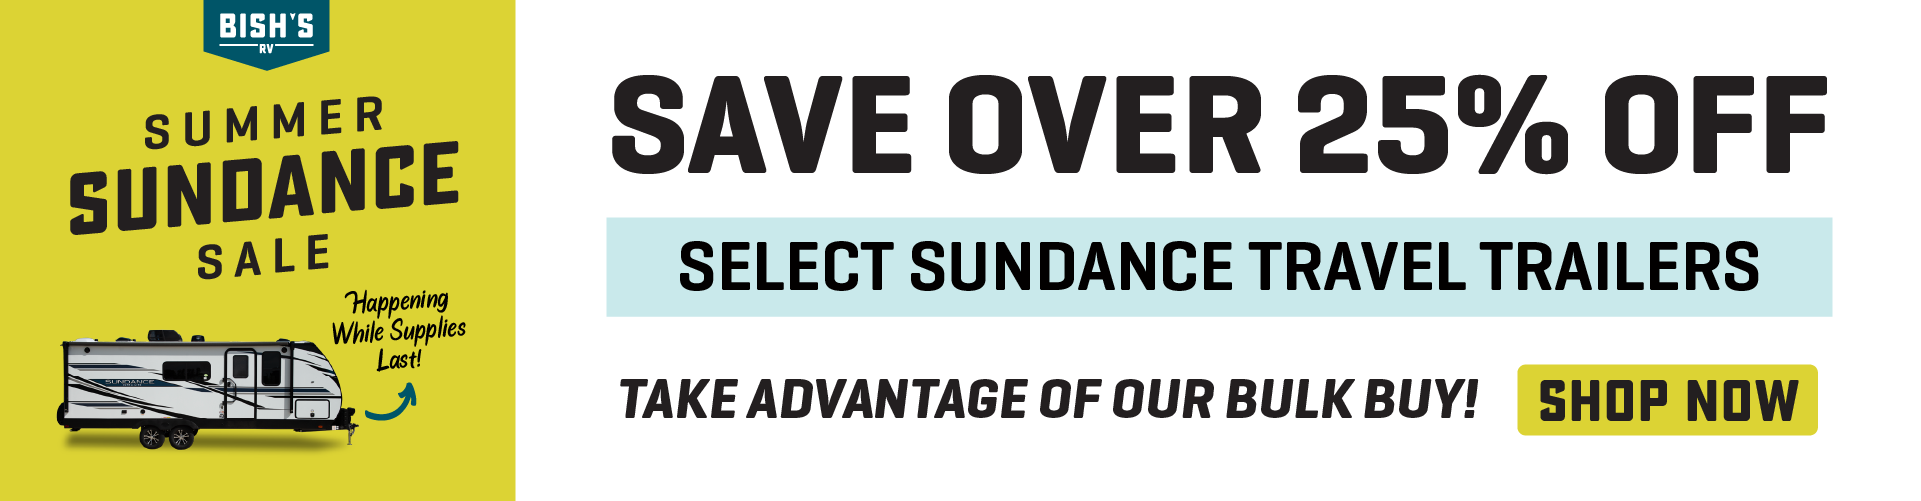 Summer Sundance Sale - Save Over 25% Off Selection Sundance Trailers - Junction City, OR